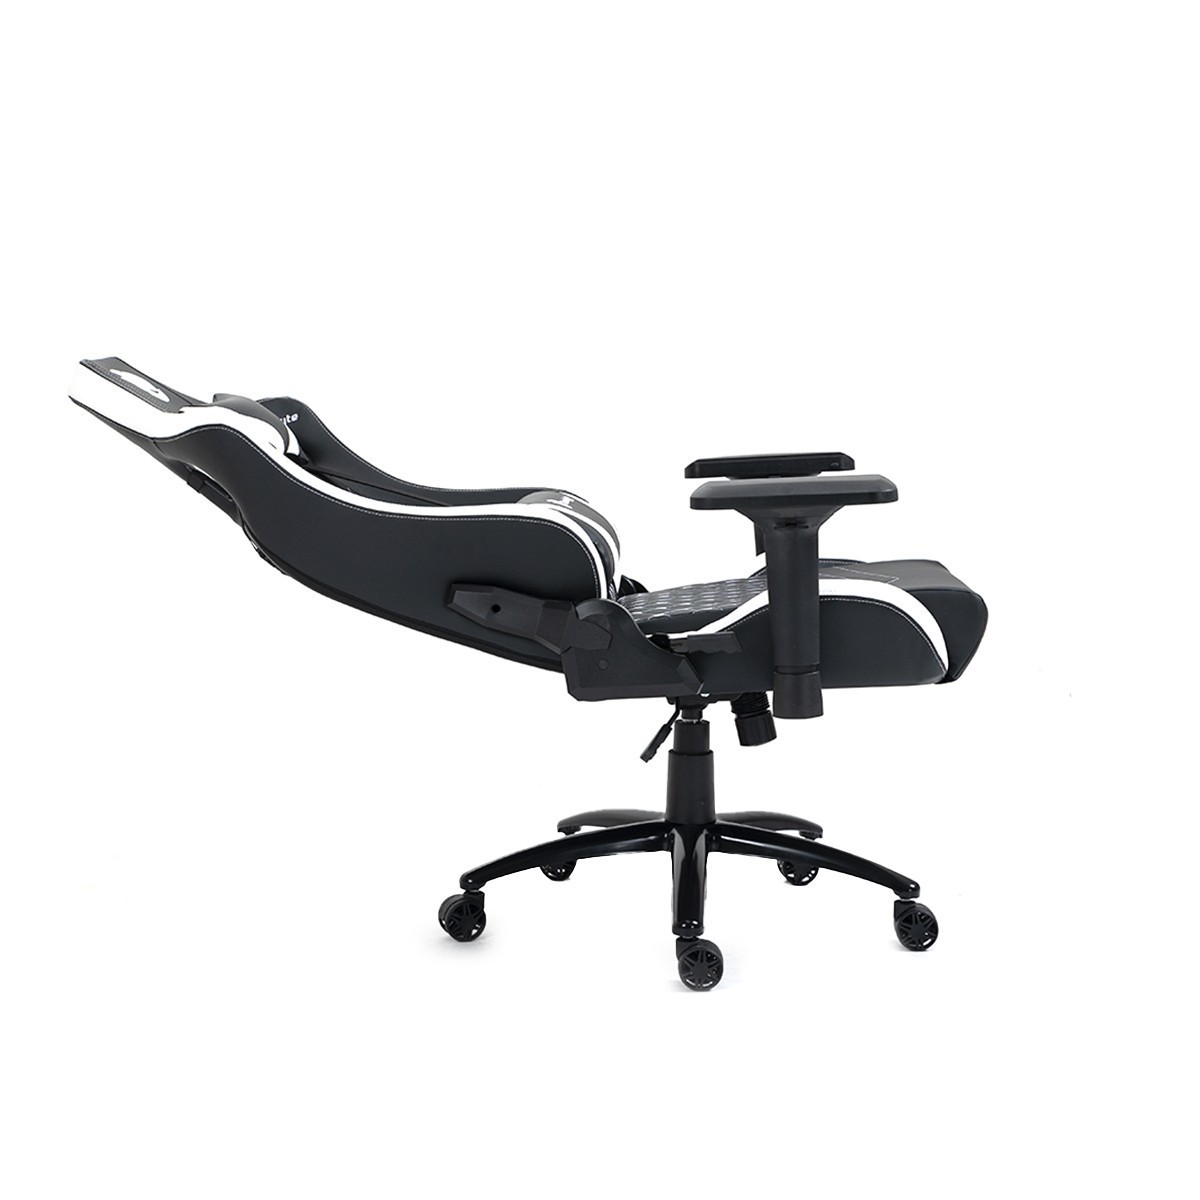 Cadeira Gamer Terabyte Black Throne, Reclinável, 4D, Preto e Branco